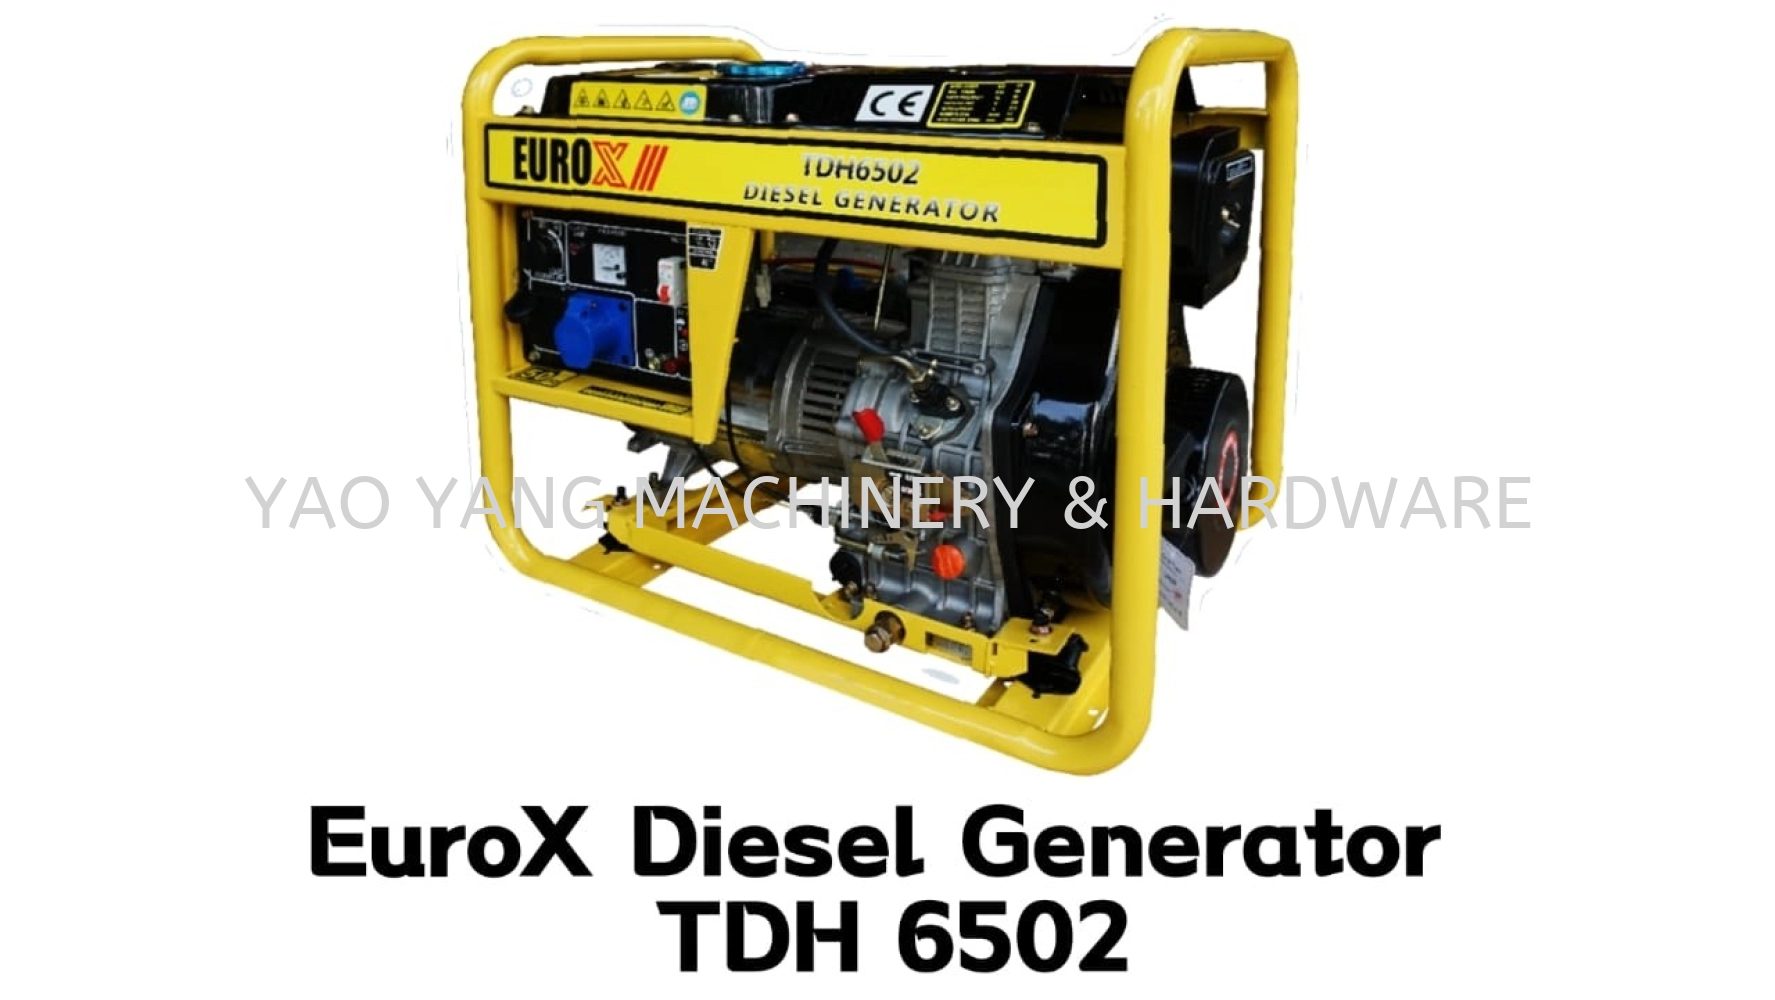 EuroX-III Diesel Generator